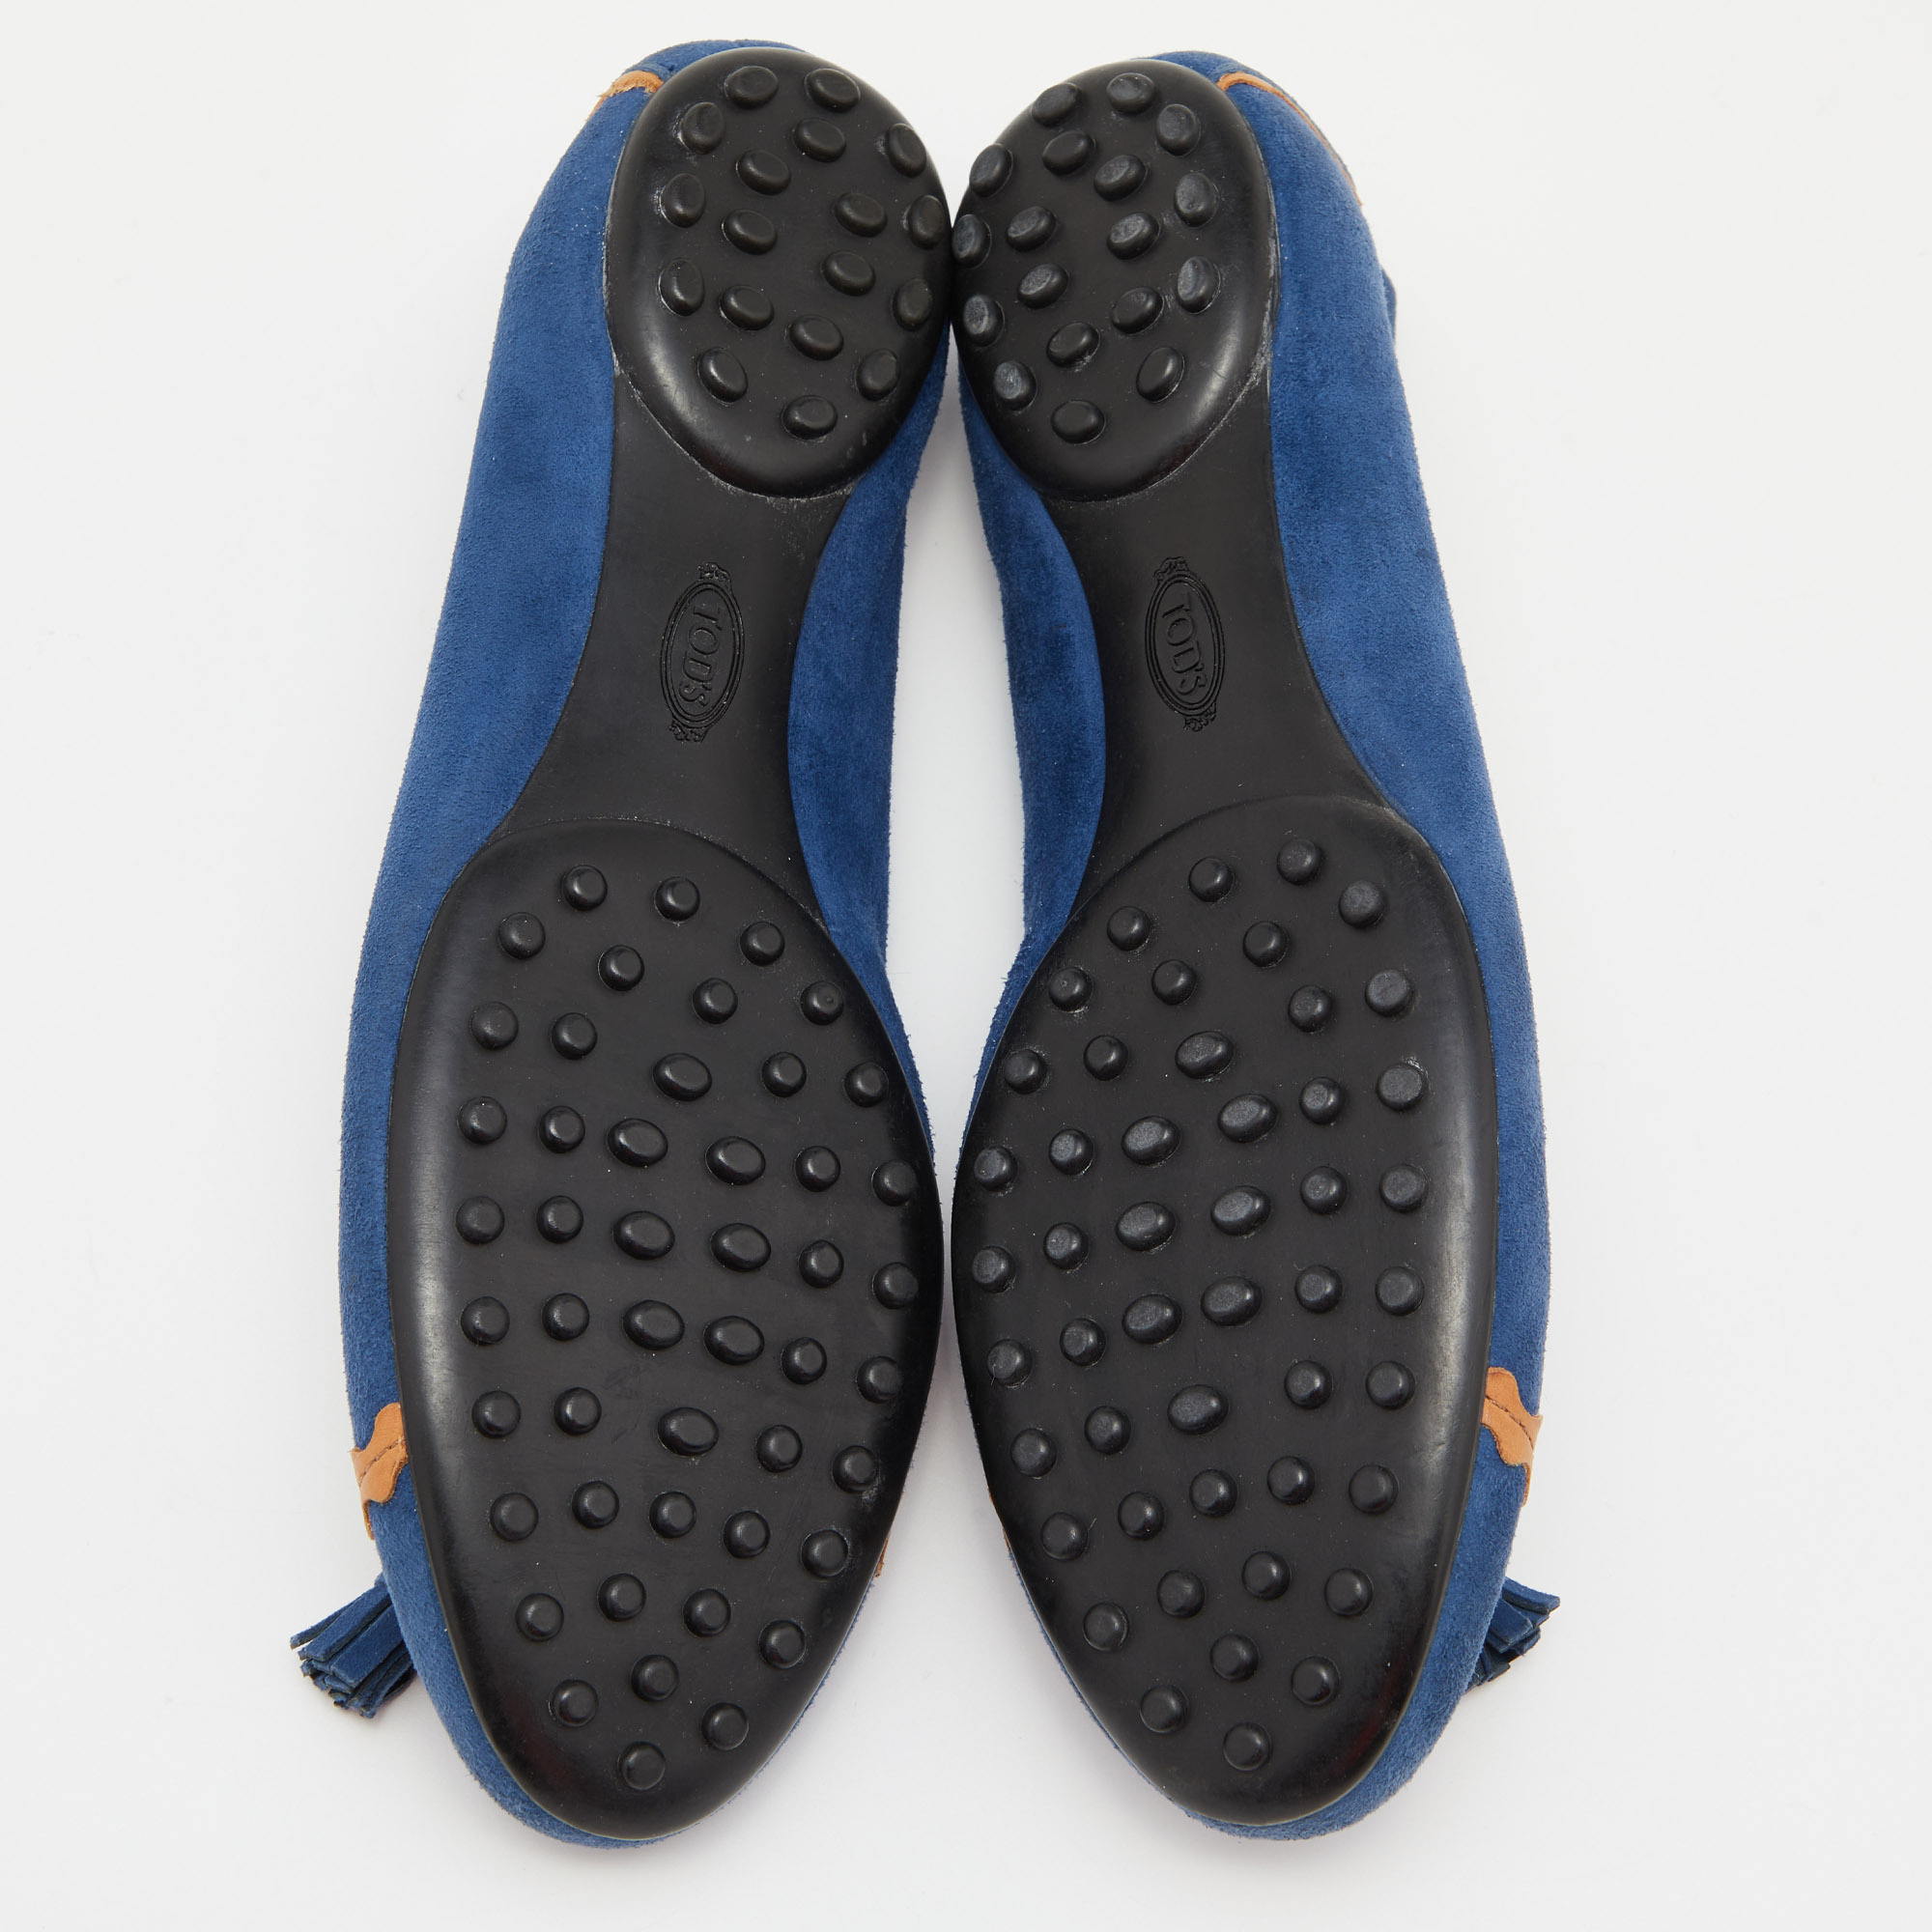 Tod's Blue/Tan Leather Tassel Ballet Flats Size 37